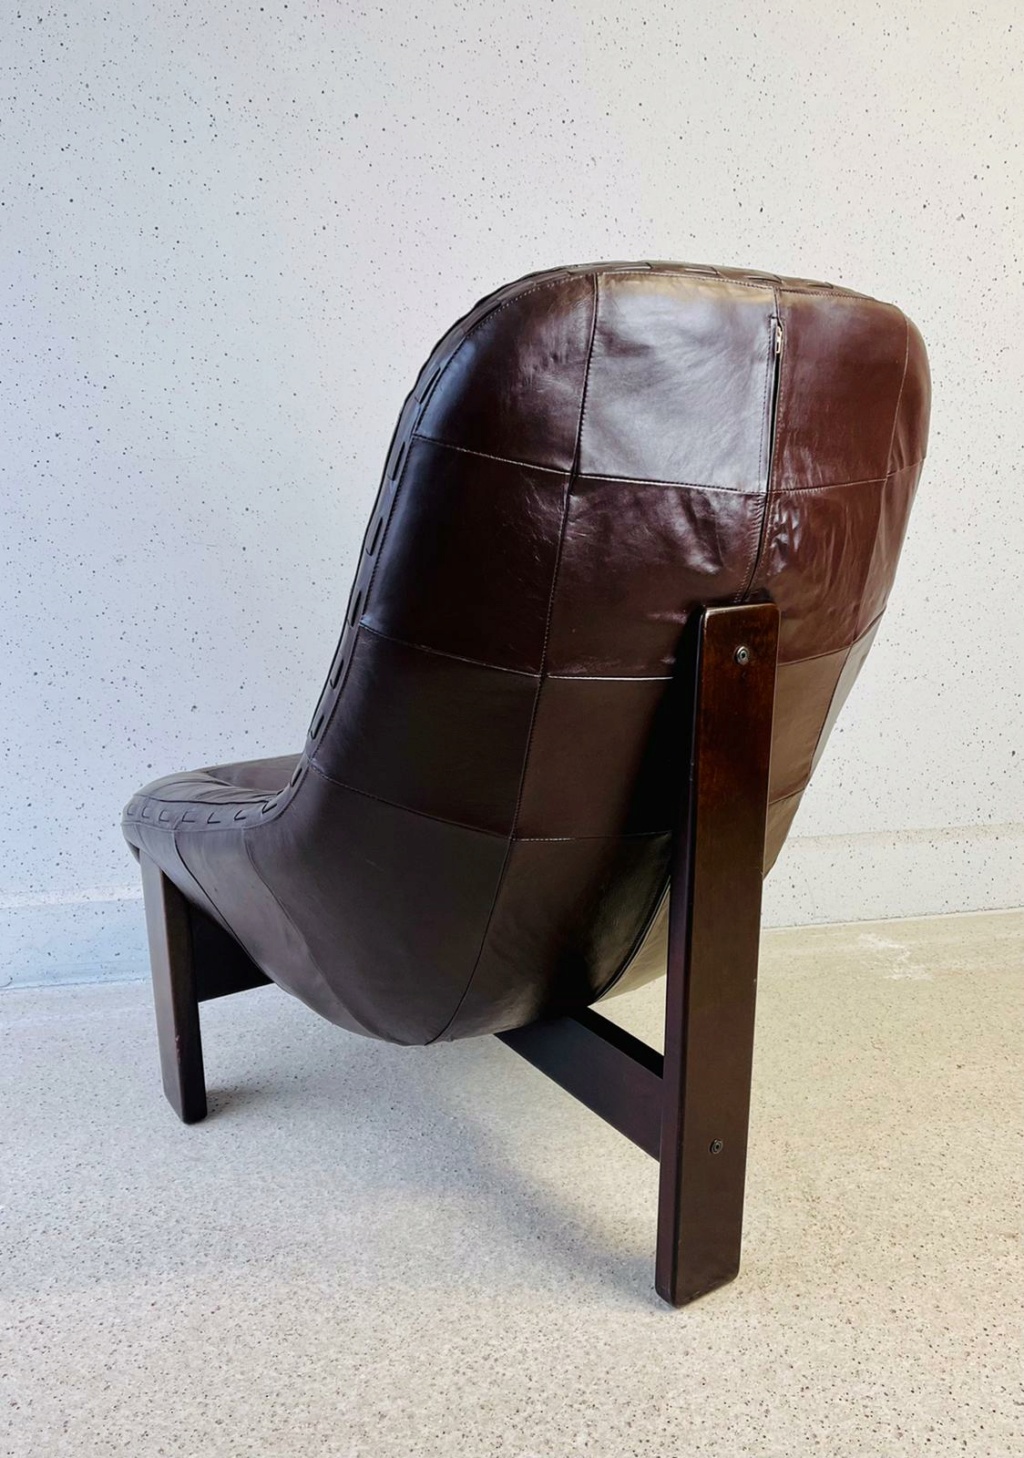 Probel chair, Brazil 18b49f10